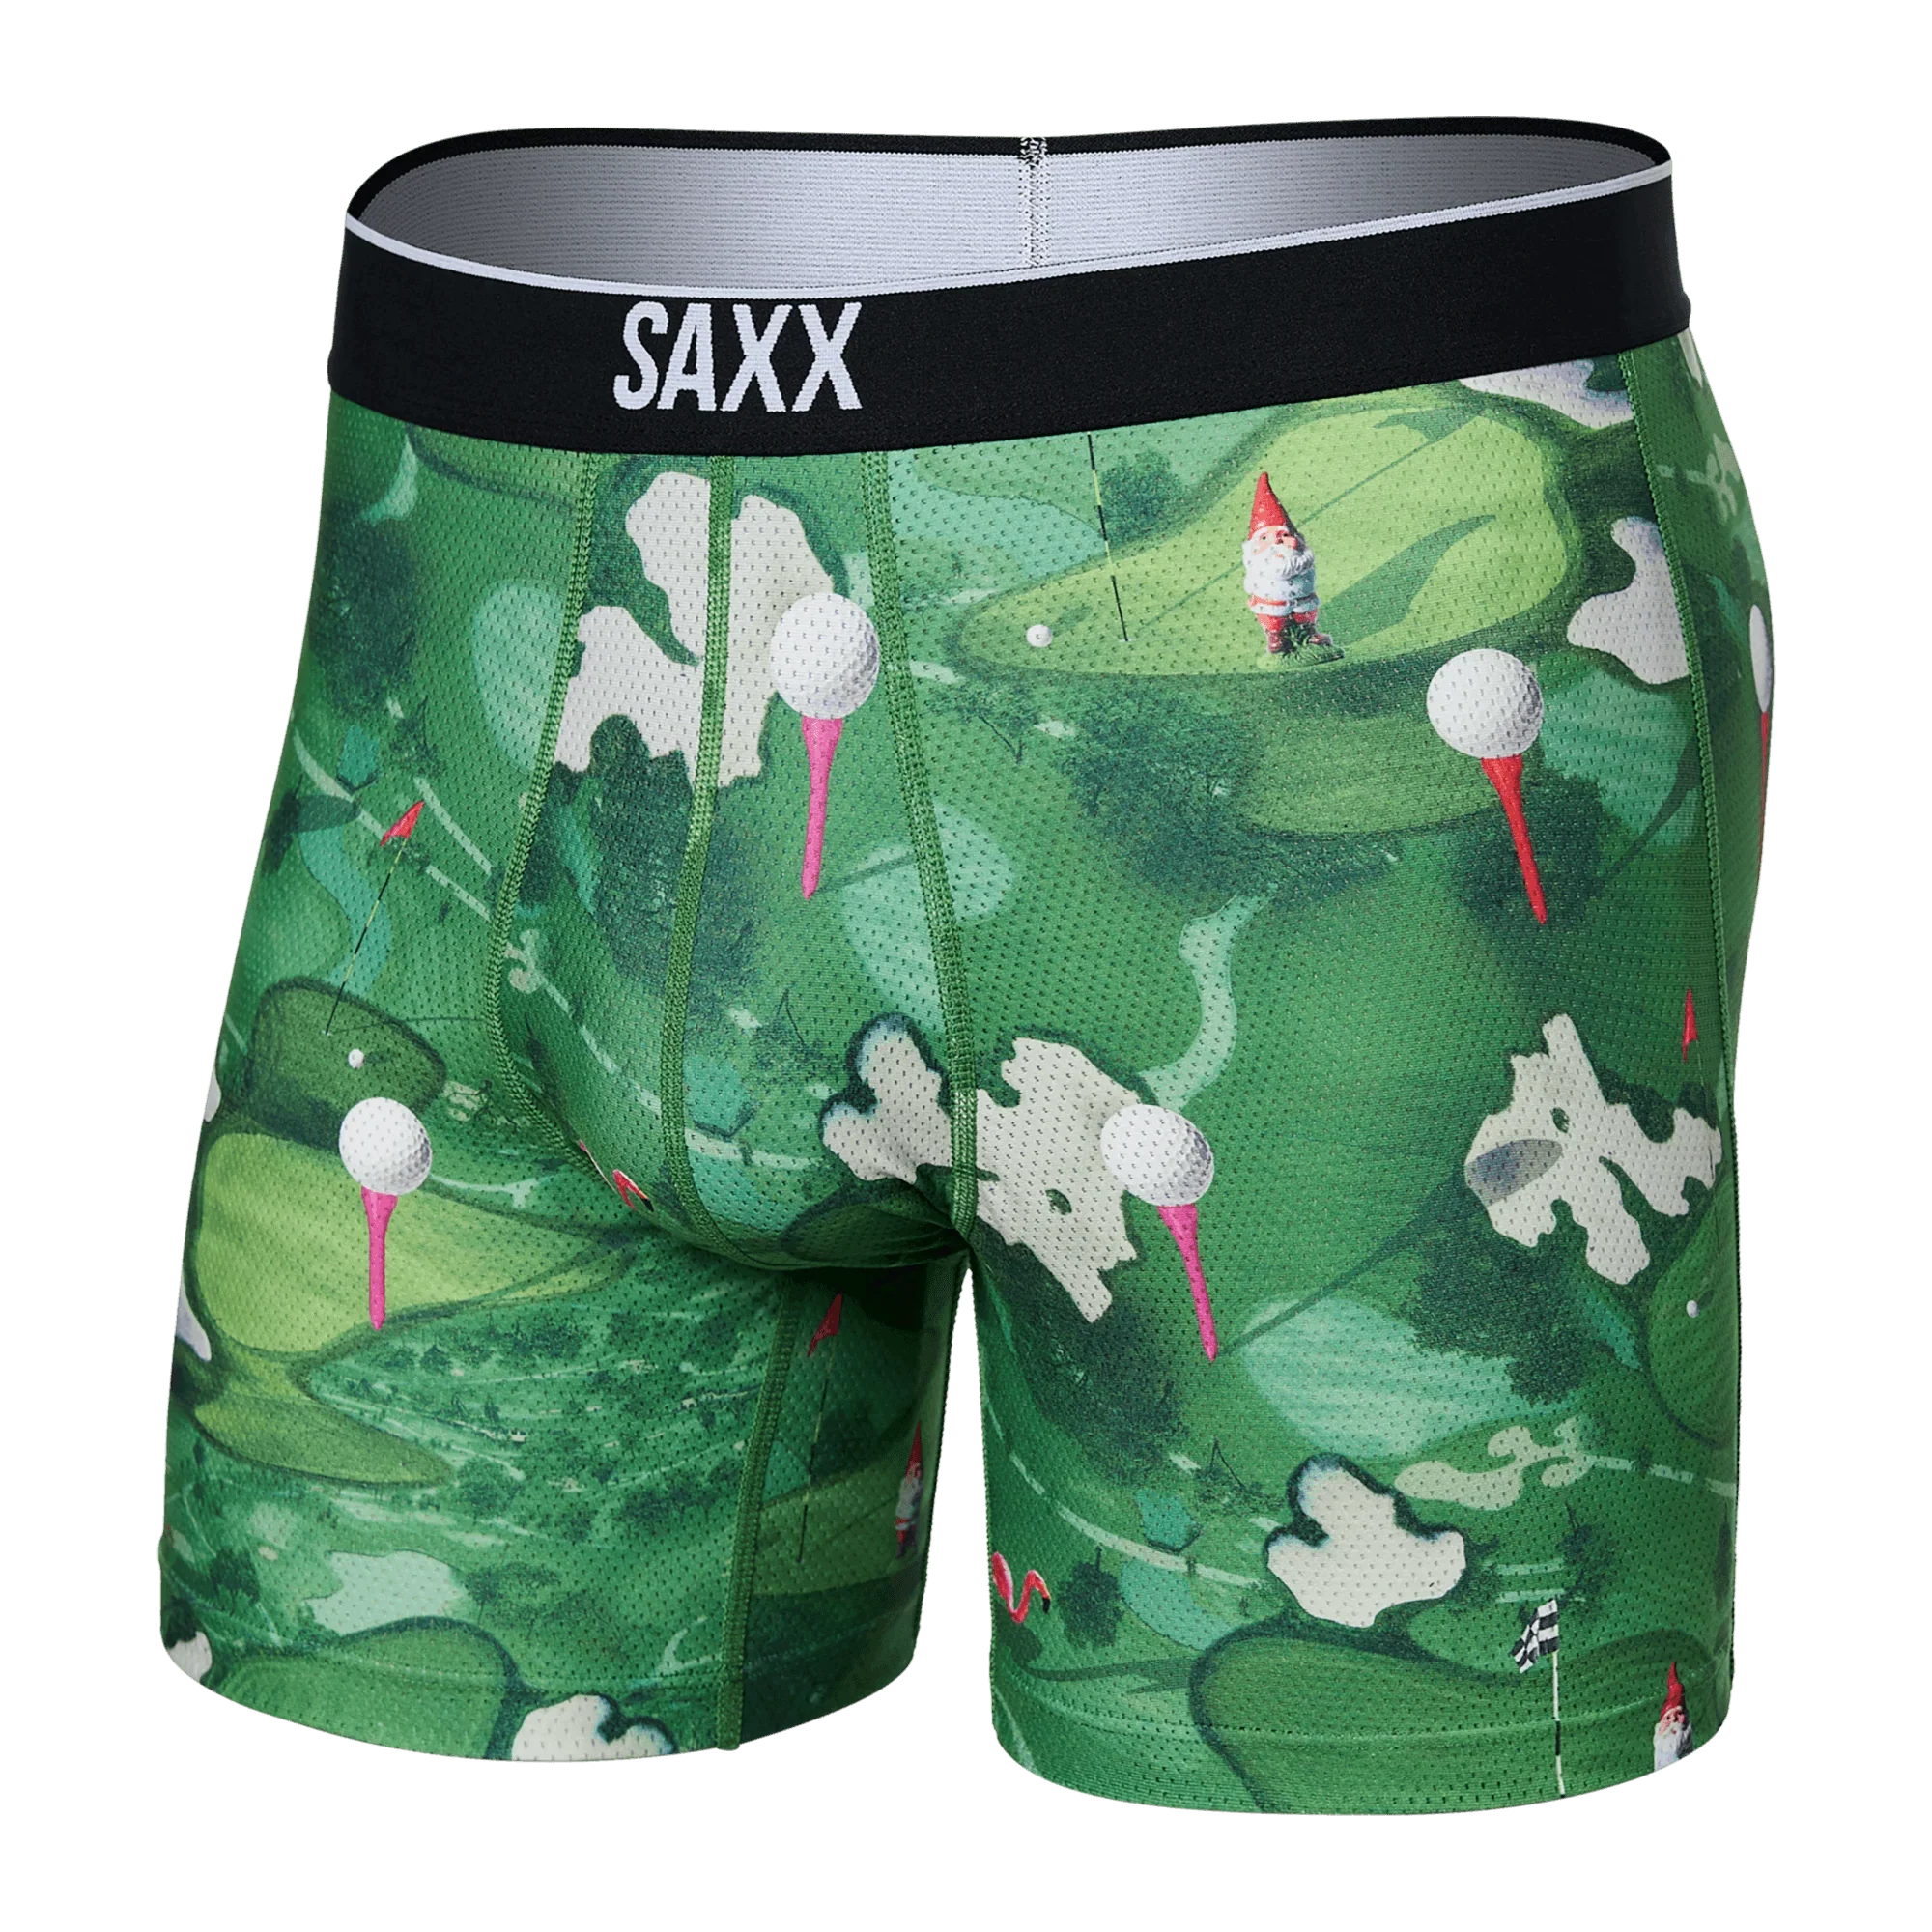 'SAXX Volt Breathable Mesh Boxer Brief - Off Course' in 'Green' colour